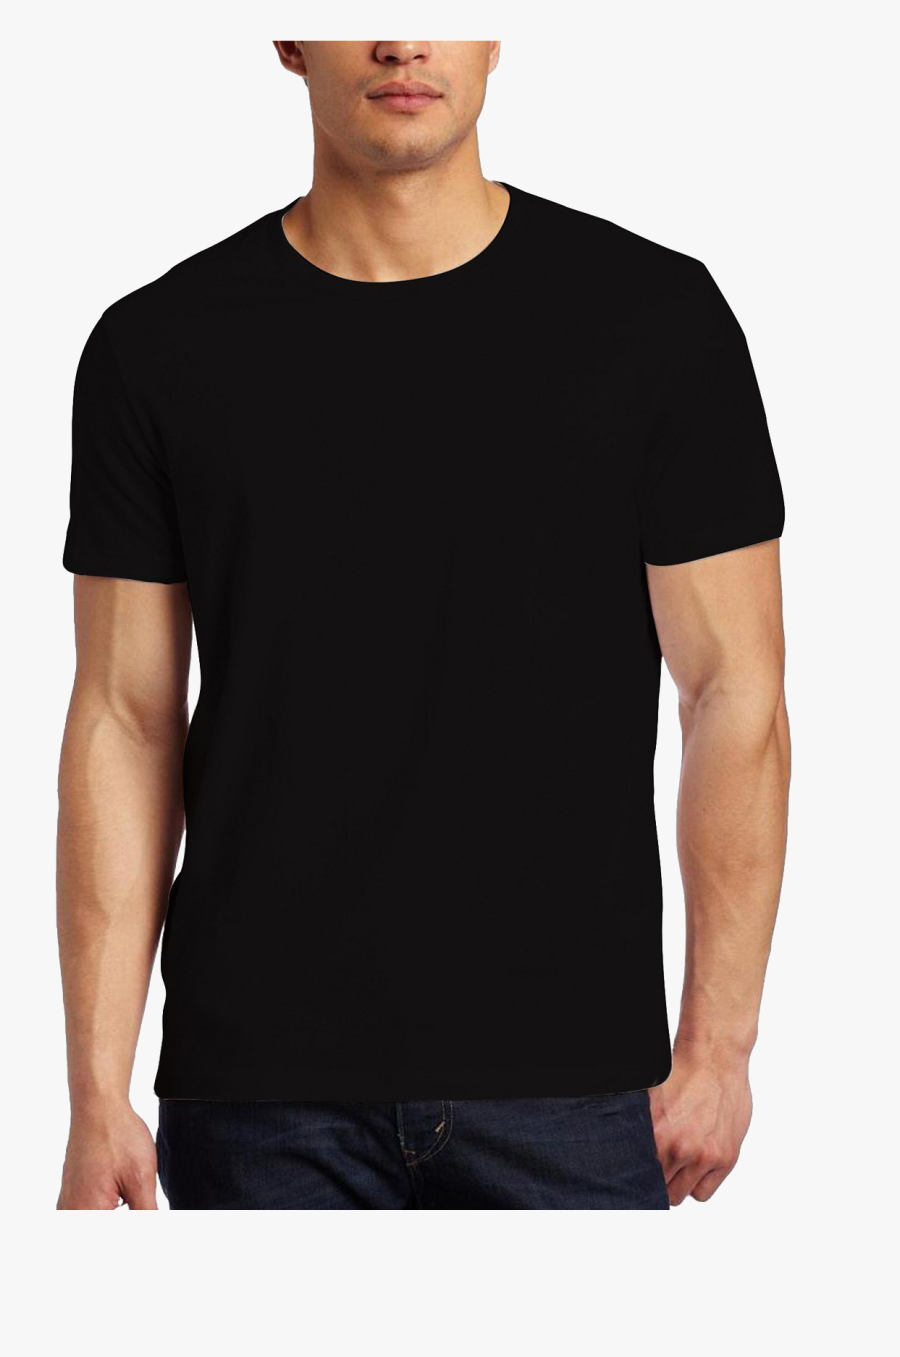 Download Black T-shirt Png Image Background - Real Black T Shirt ...